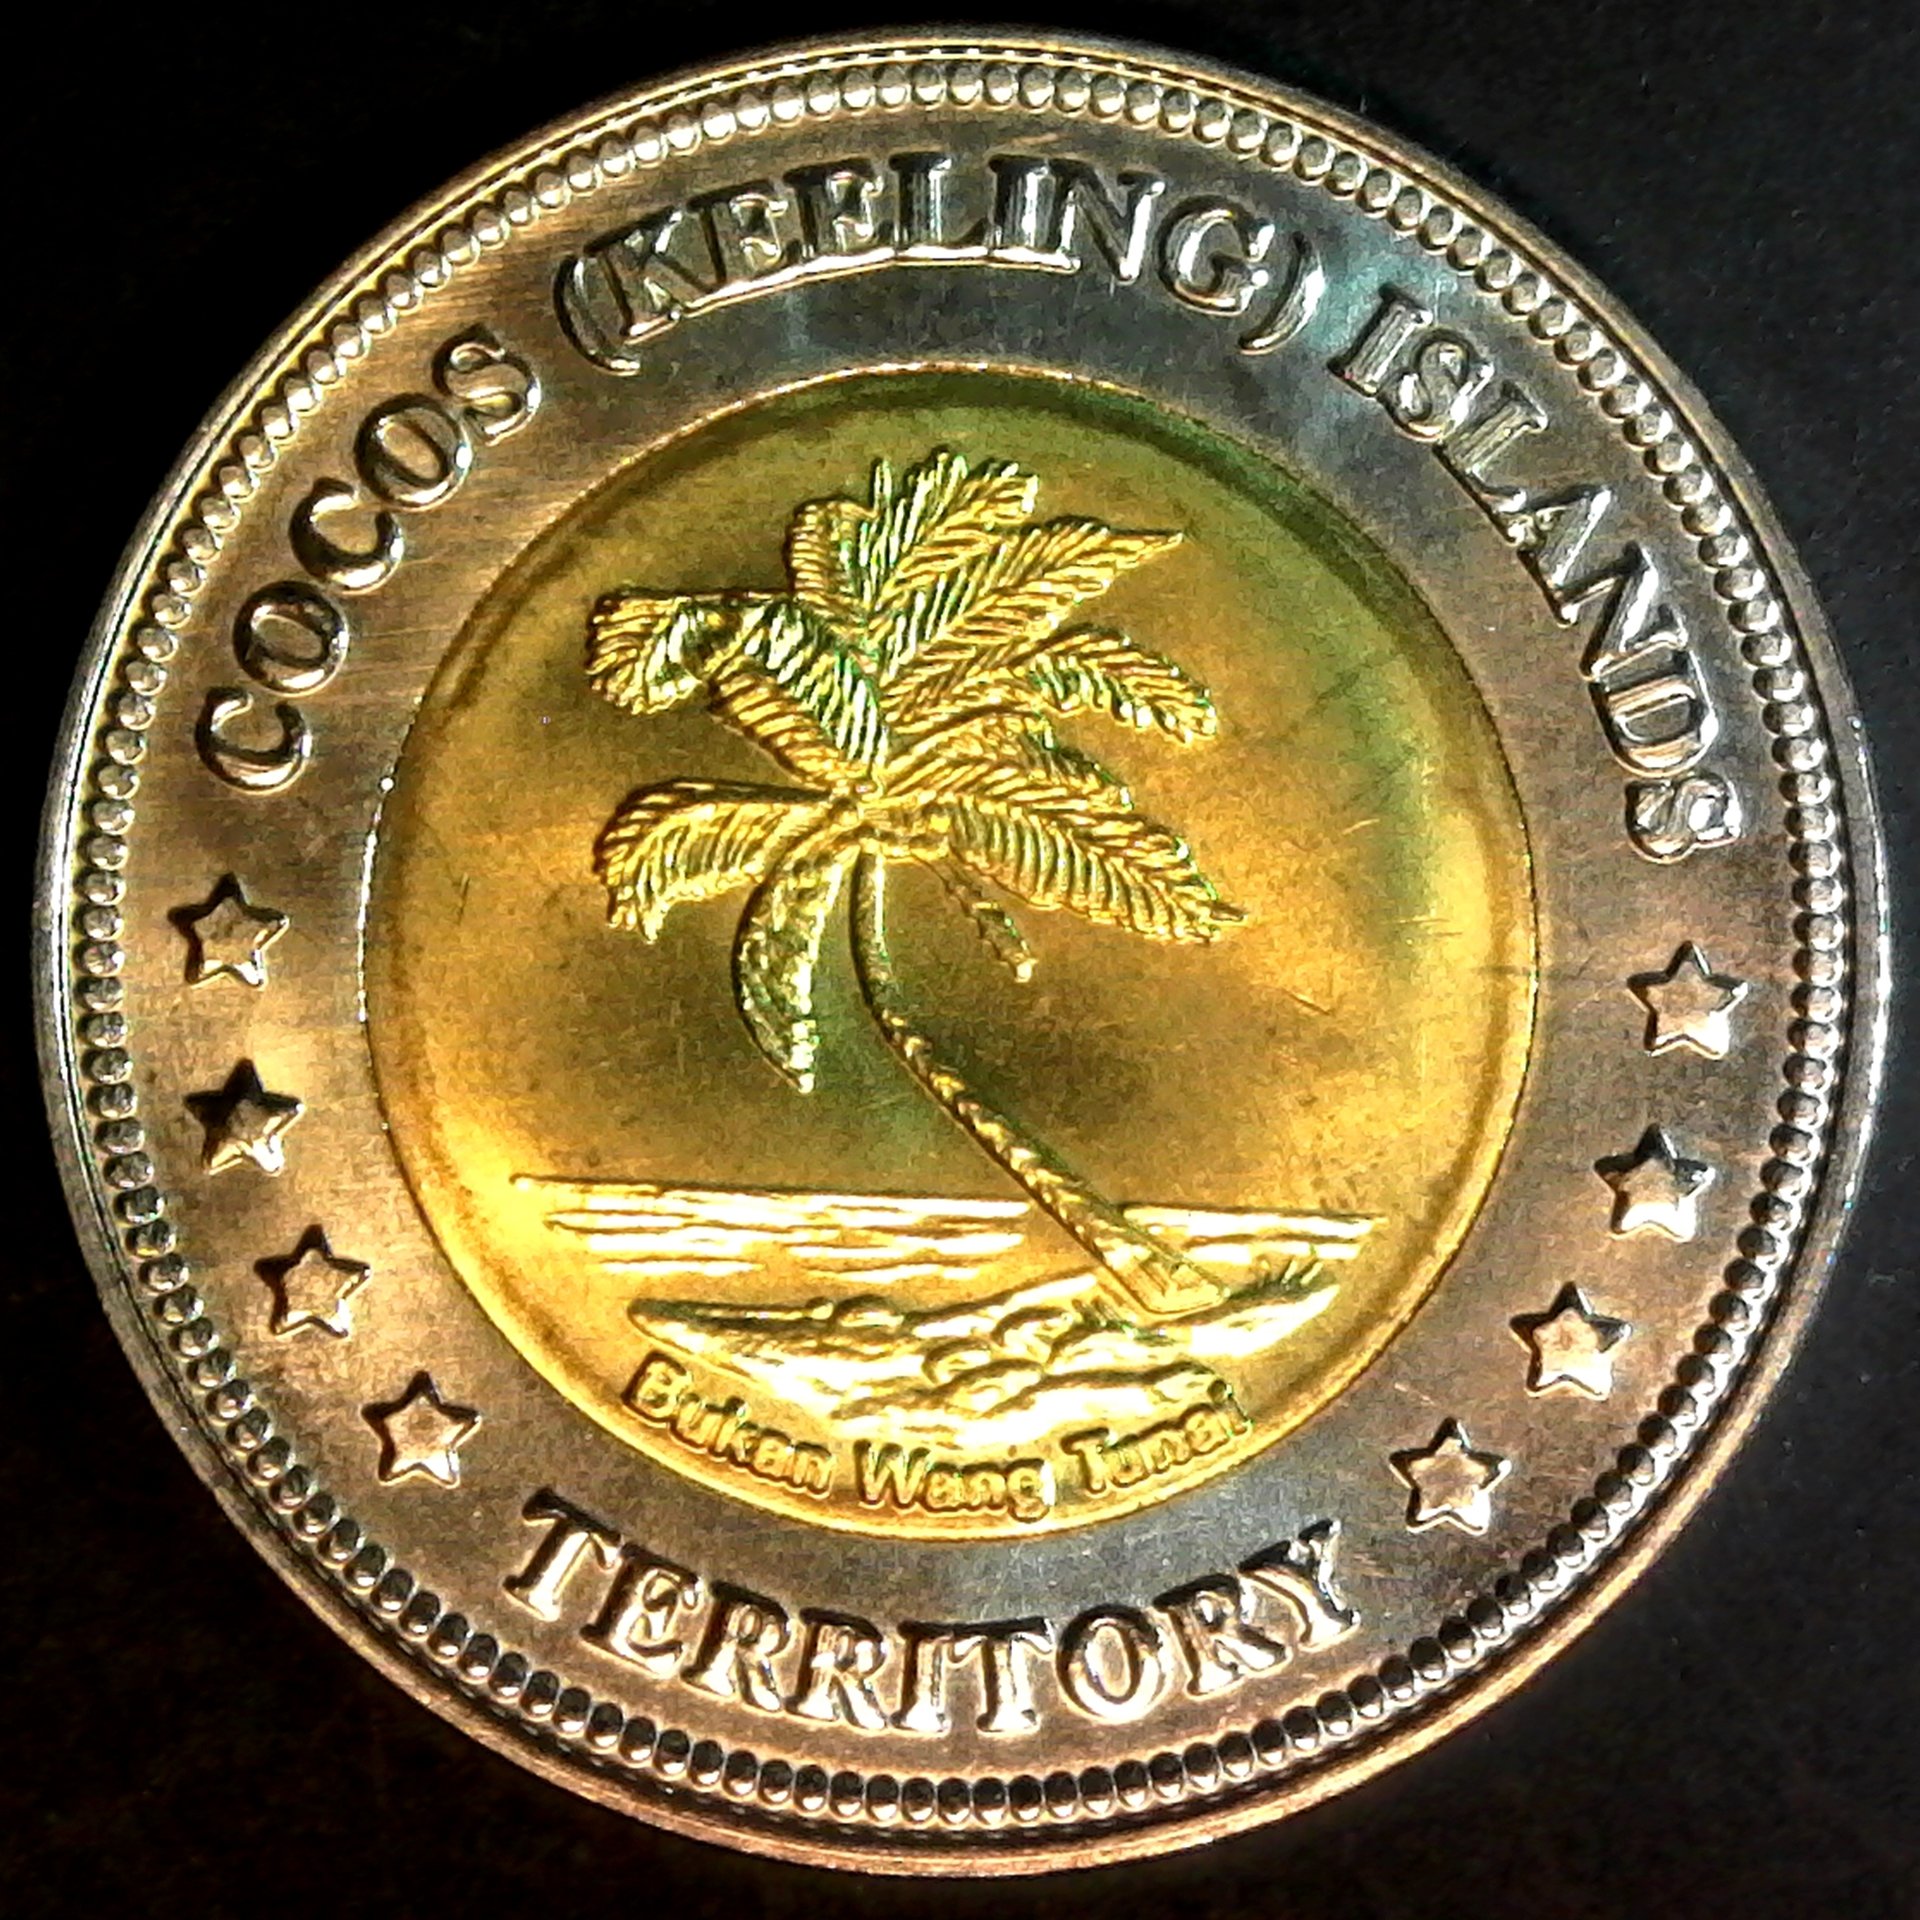 Cocos Keeling Five dollars 2004 fantasy token obv.jpg